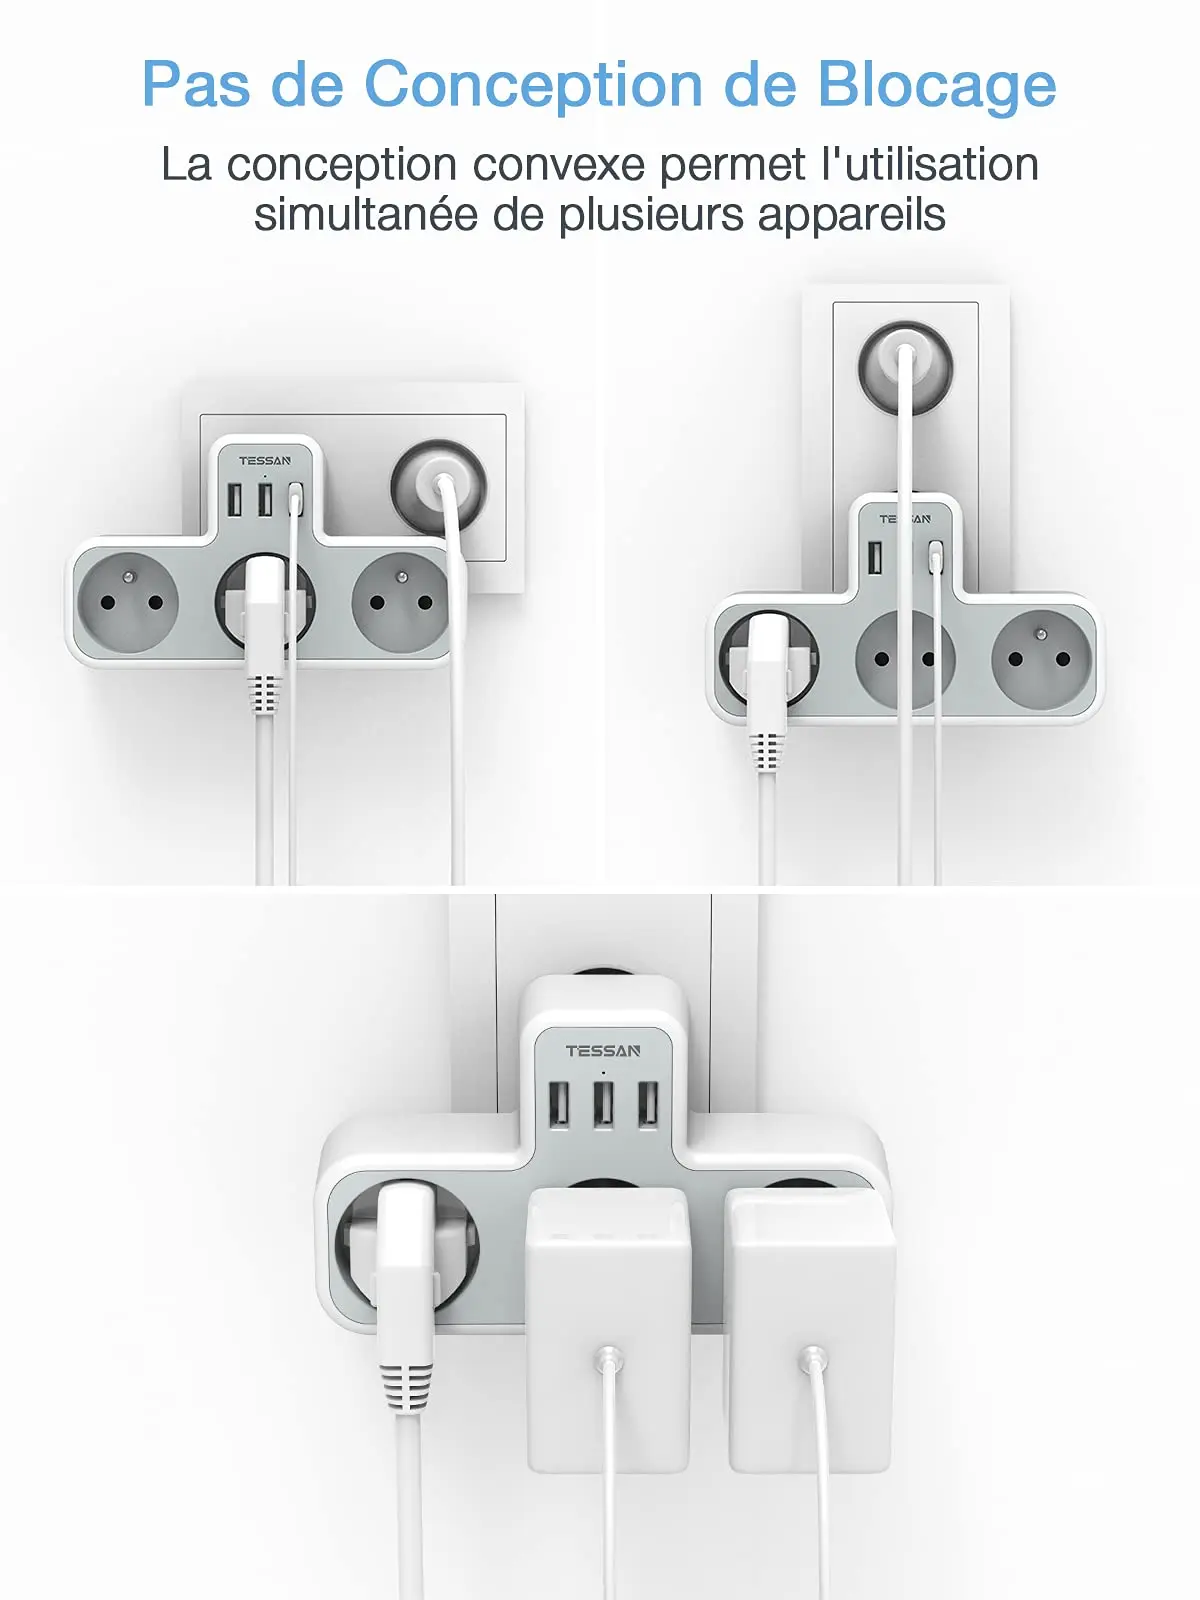 TESSAN Prise Multiple USB, Multiprise Murale 3 Prise et 2 Ports